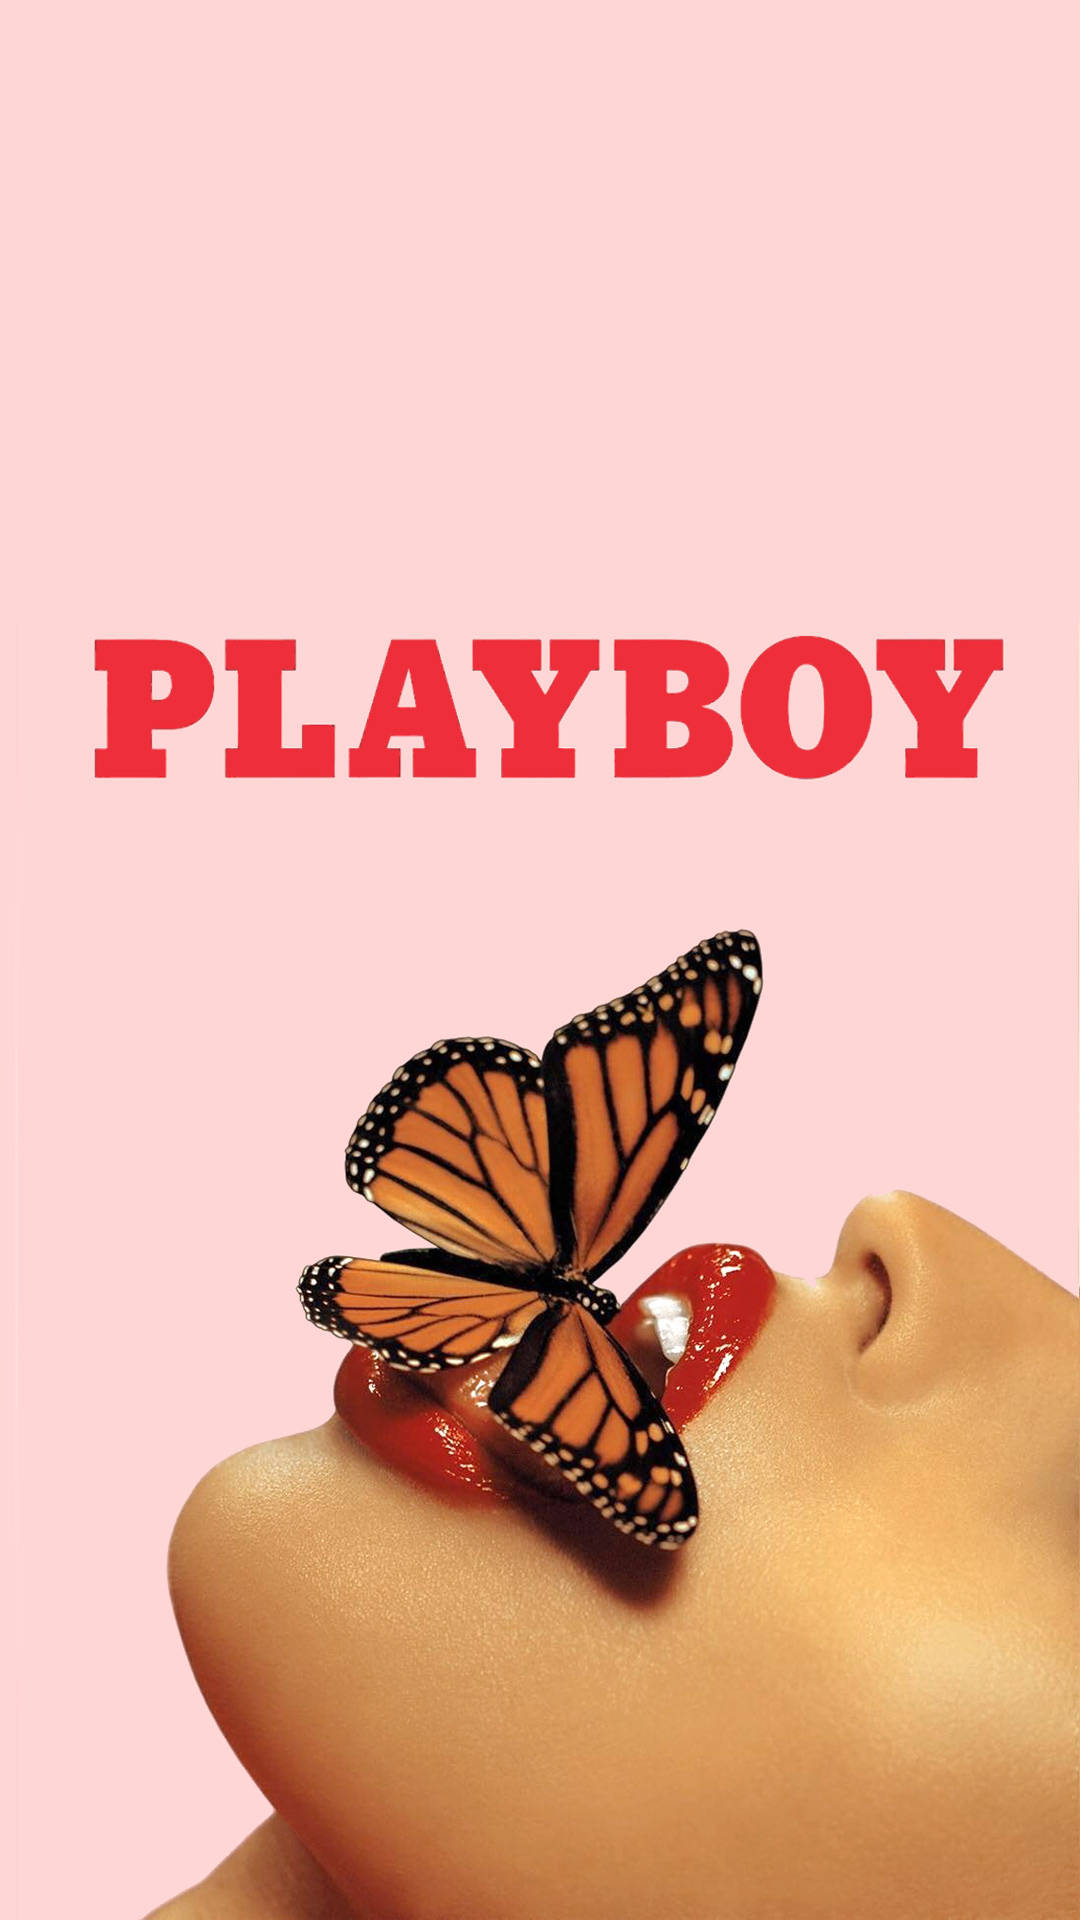 Playboy Butterfly Background